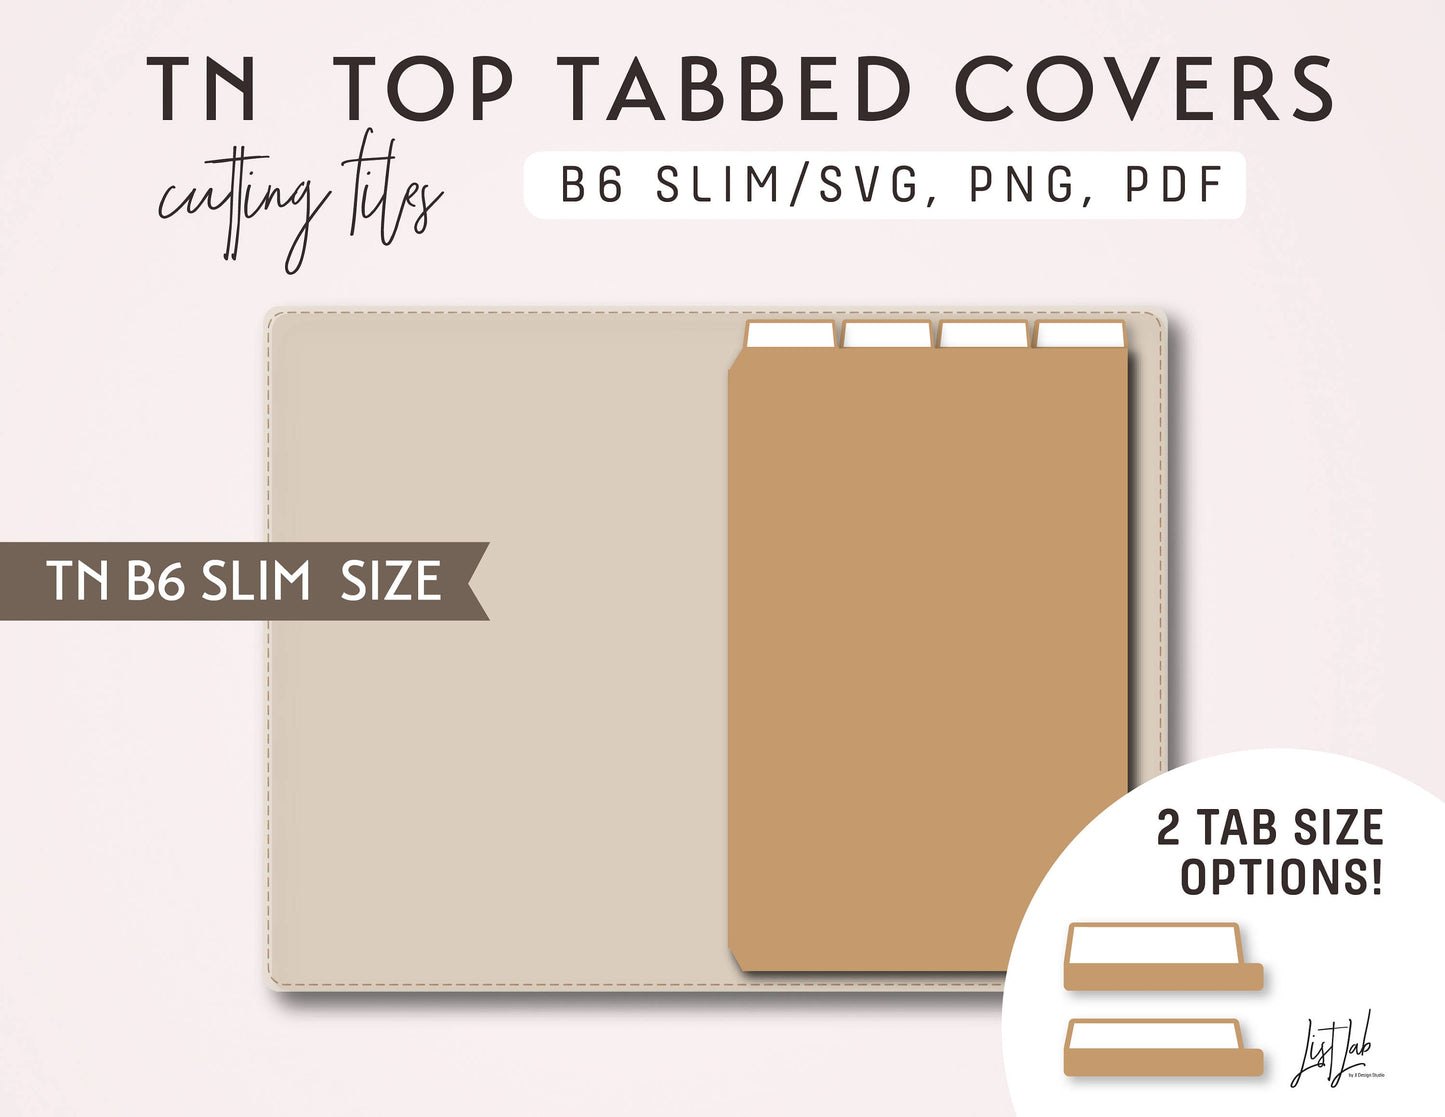 B6 Slim TN TOP TABBED COVERS KIT  Cutting Files Set